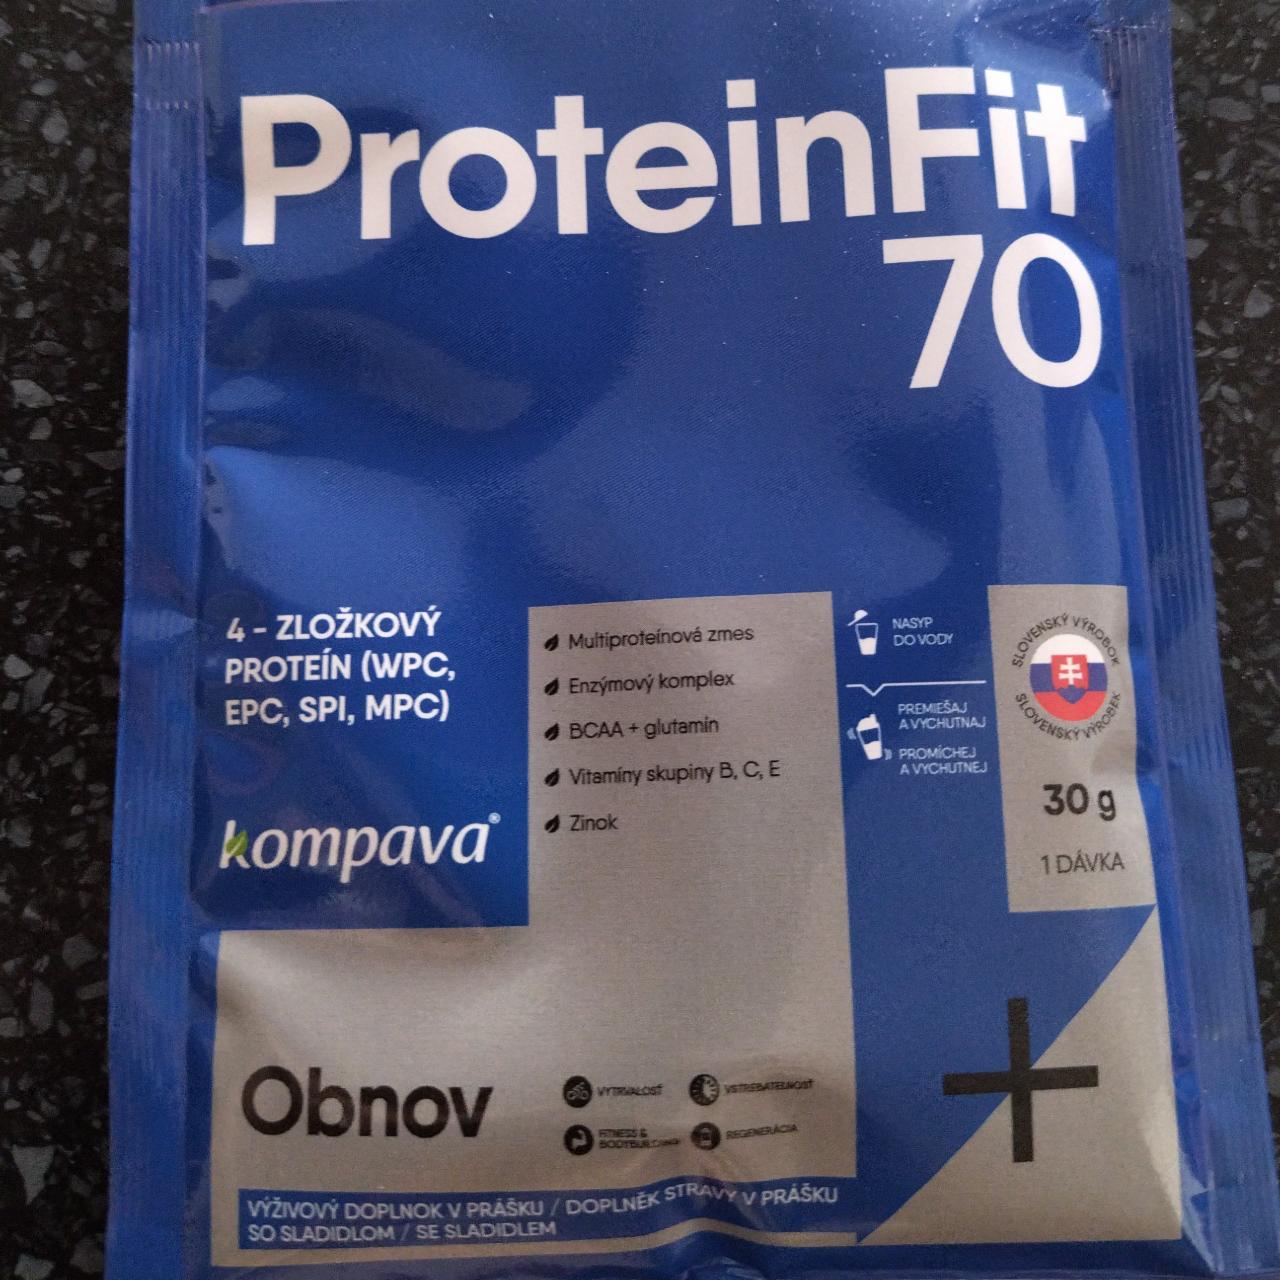 Fotografie - ProteinFit 70 Kompava